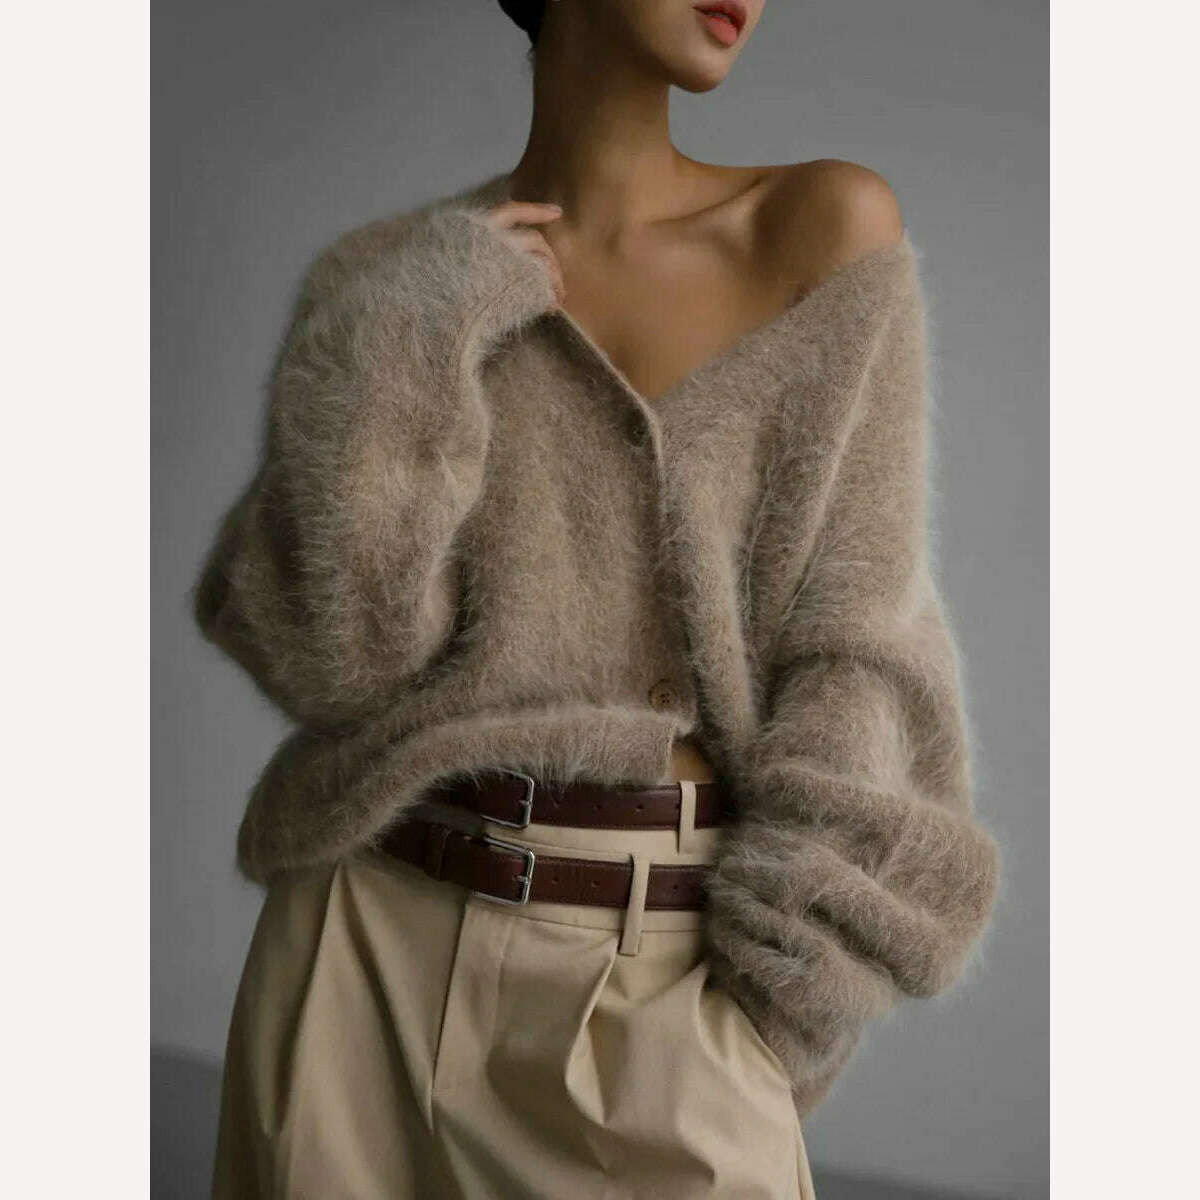 KIMLUD, Hirsionsan Elegant Long Sleeve Sweater Women 2023 New Single-Breasted Female Casual Cardigan Soft Flexible Knitted Outwear, Khaki / M, KIMLUD Women's Clothes